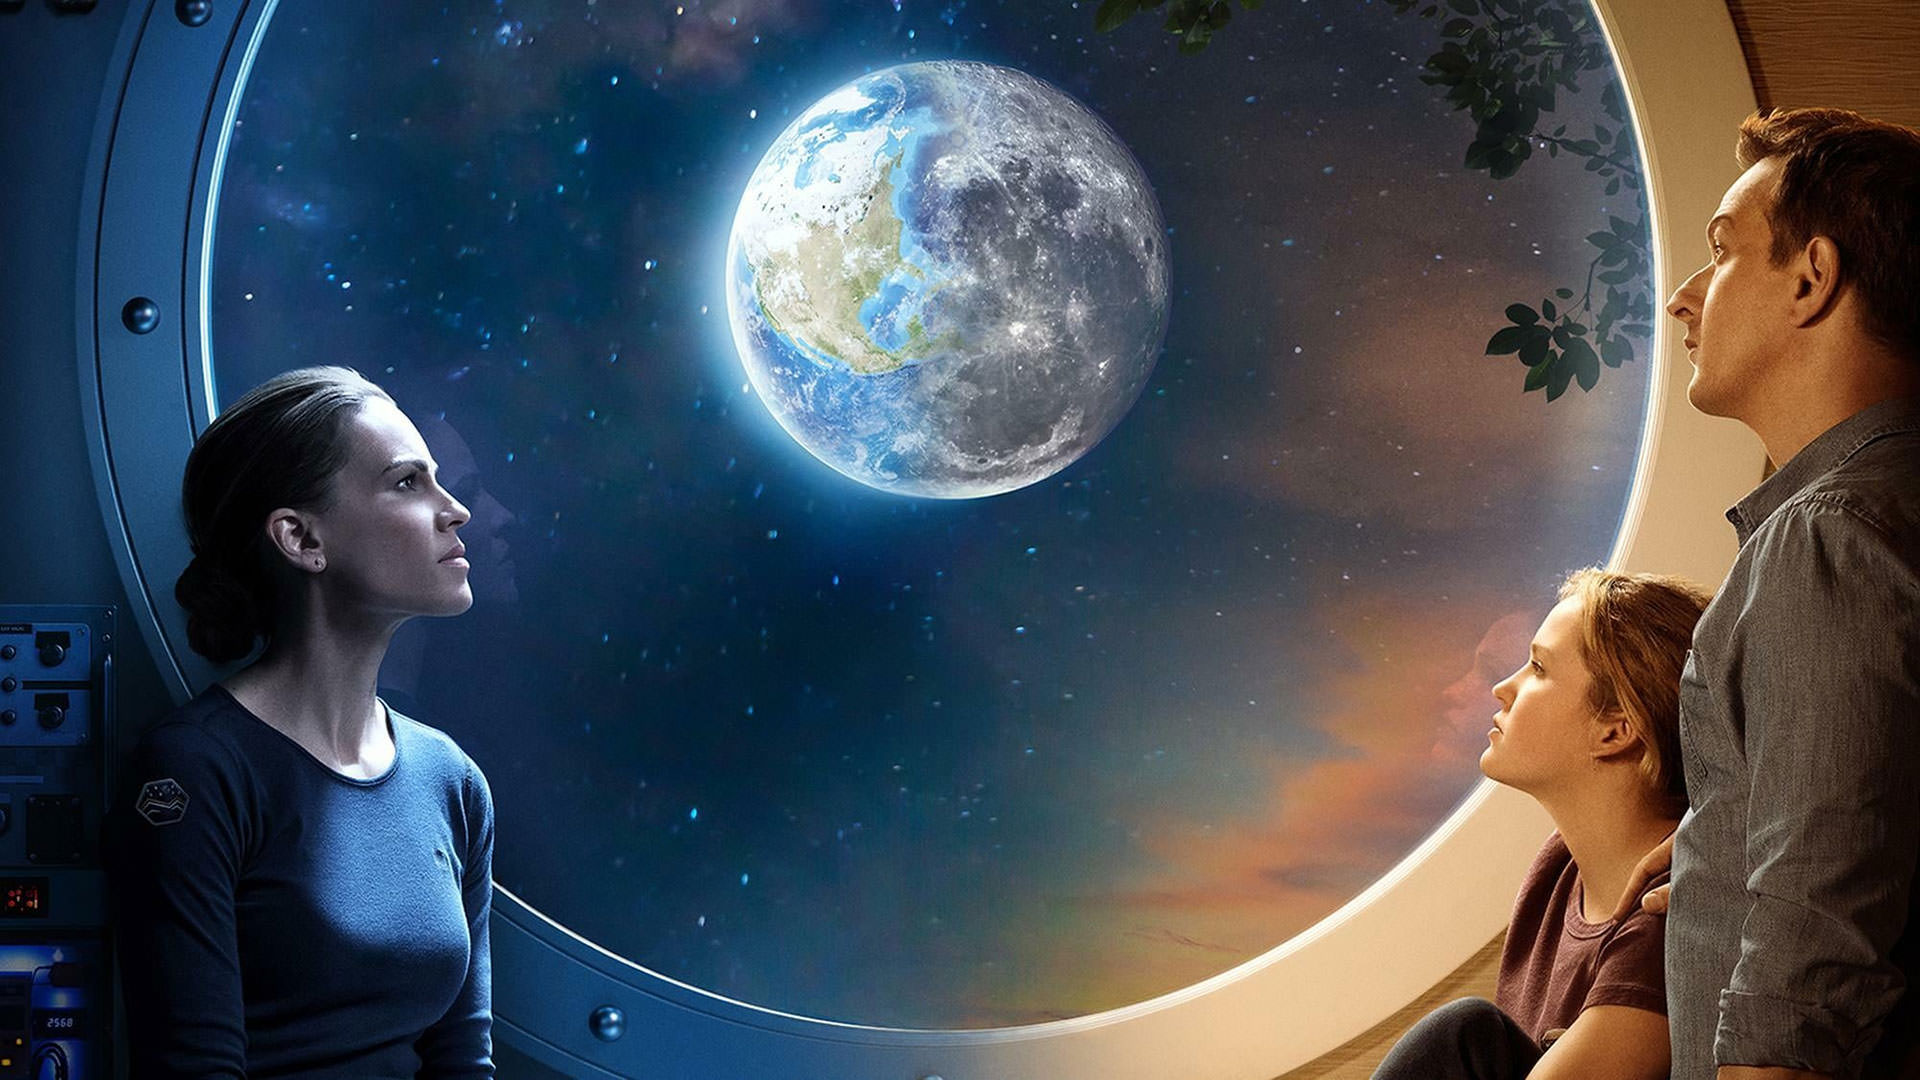 هیلاری سوانک در سریال Away با منظره کره زمین